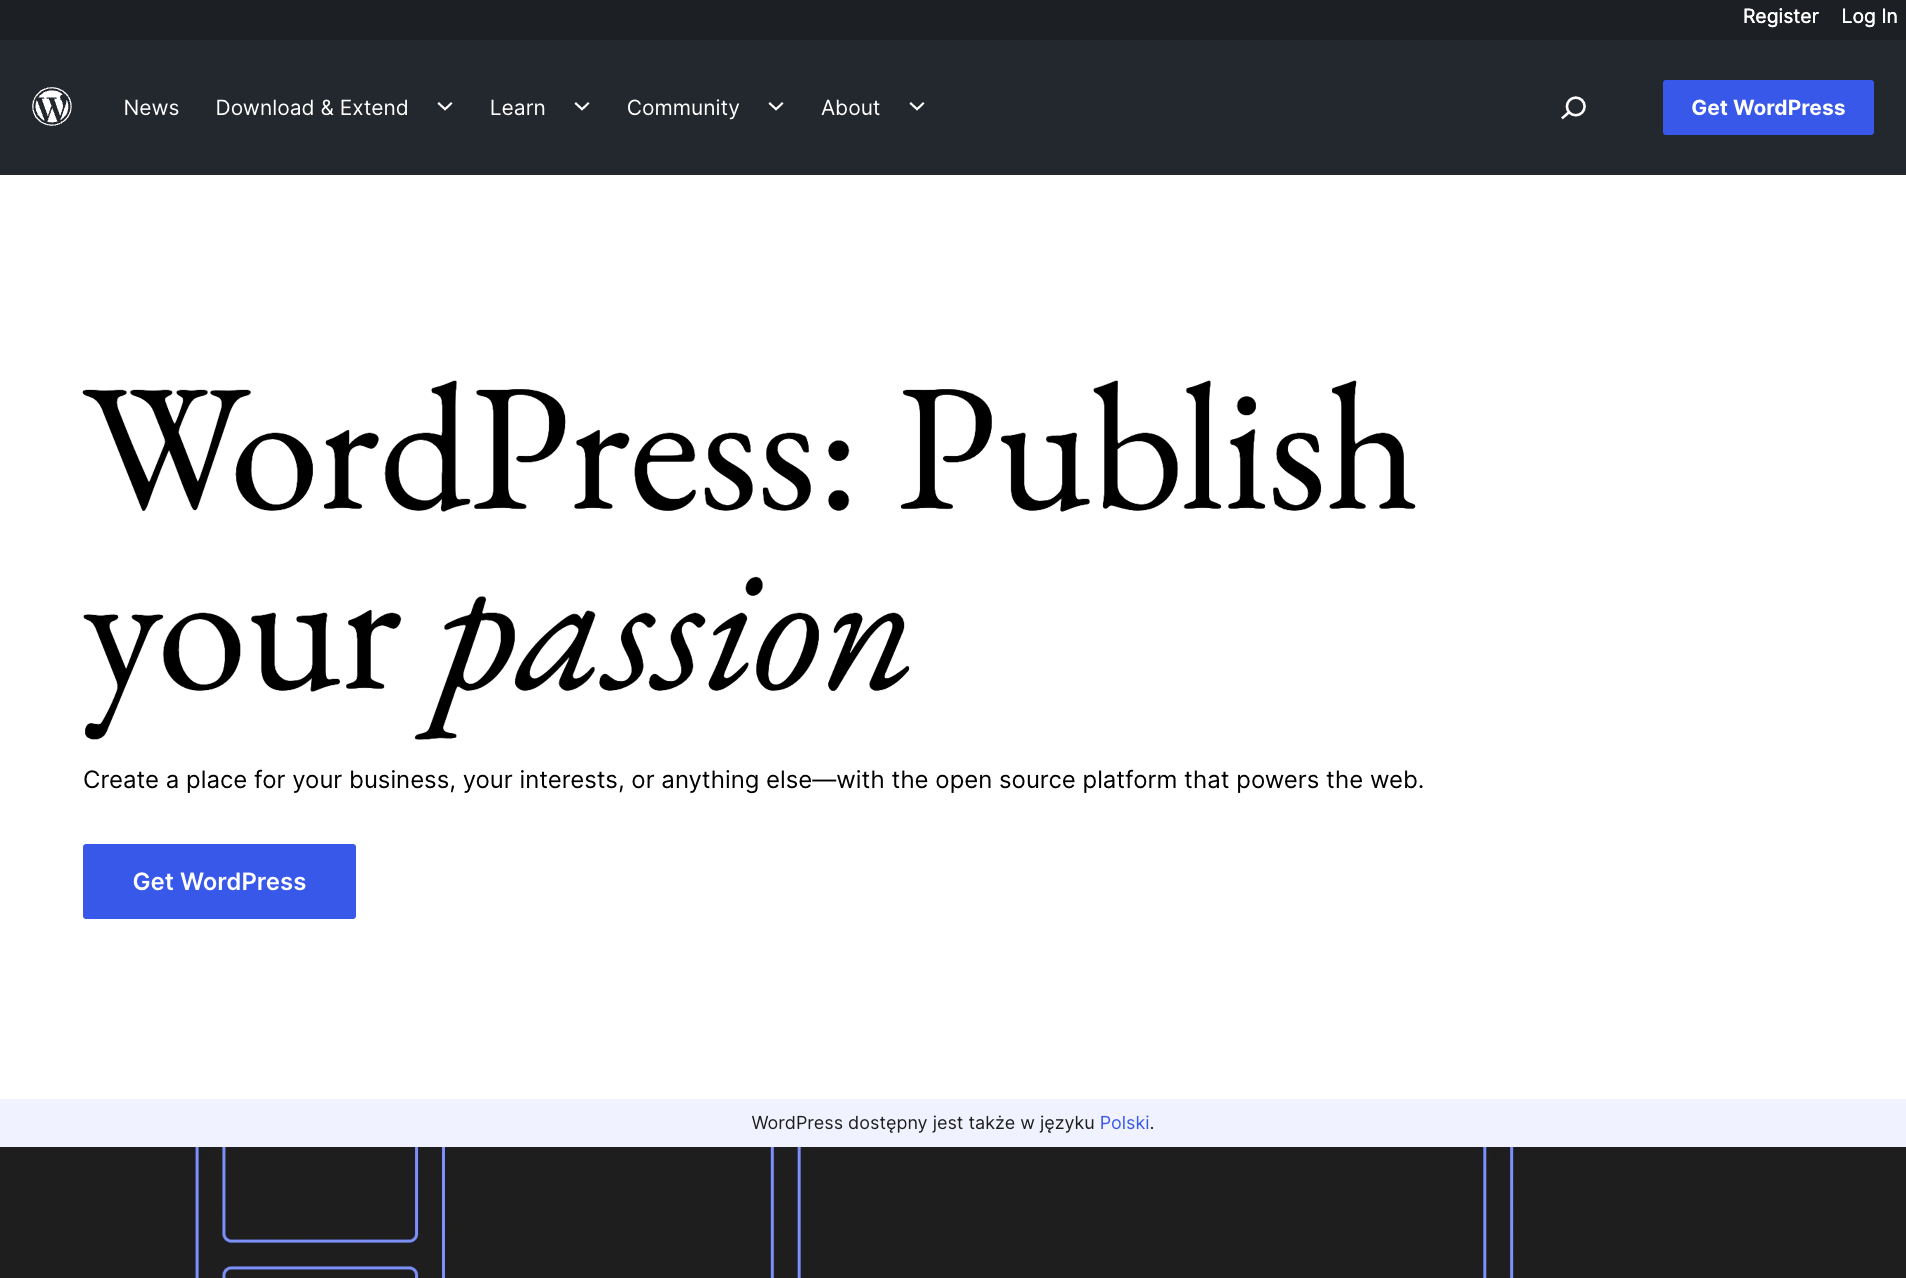 Wordpress.org website.